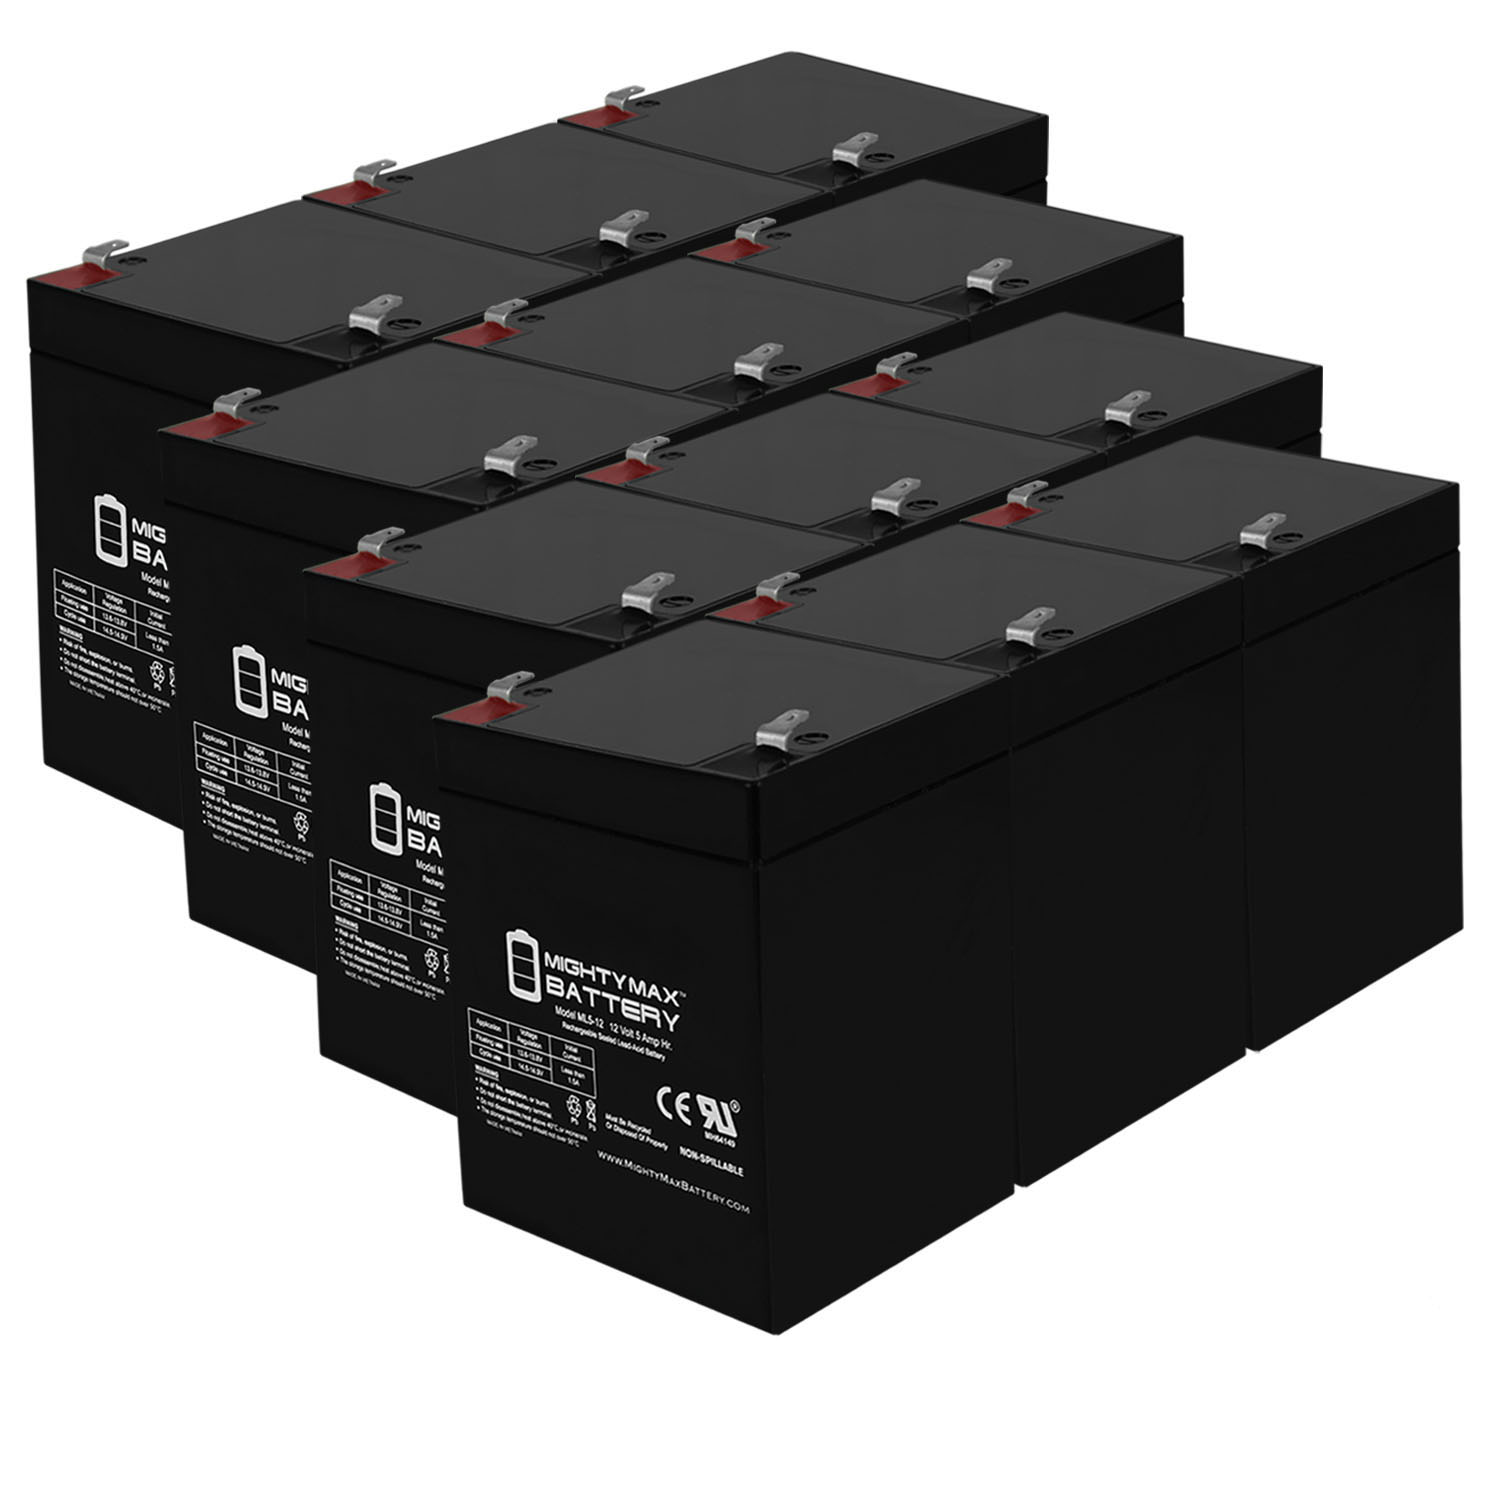 12V 5AH SLA Replacement Battery for Dorcy Spotlight 41-1067 - 12 Pack